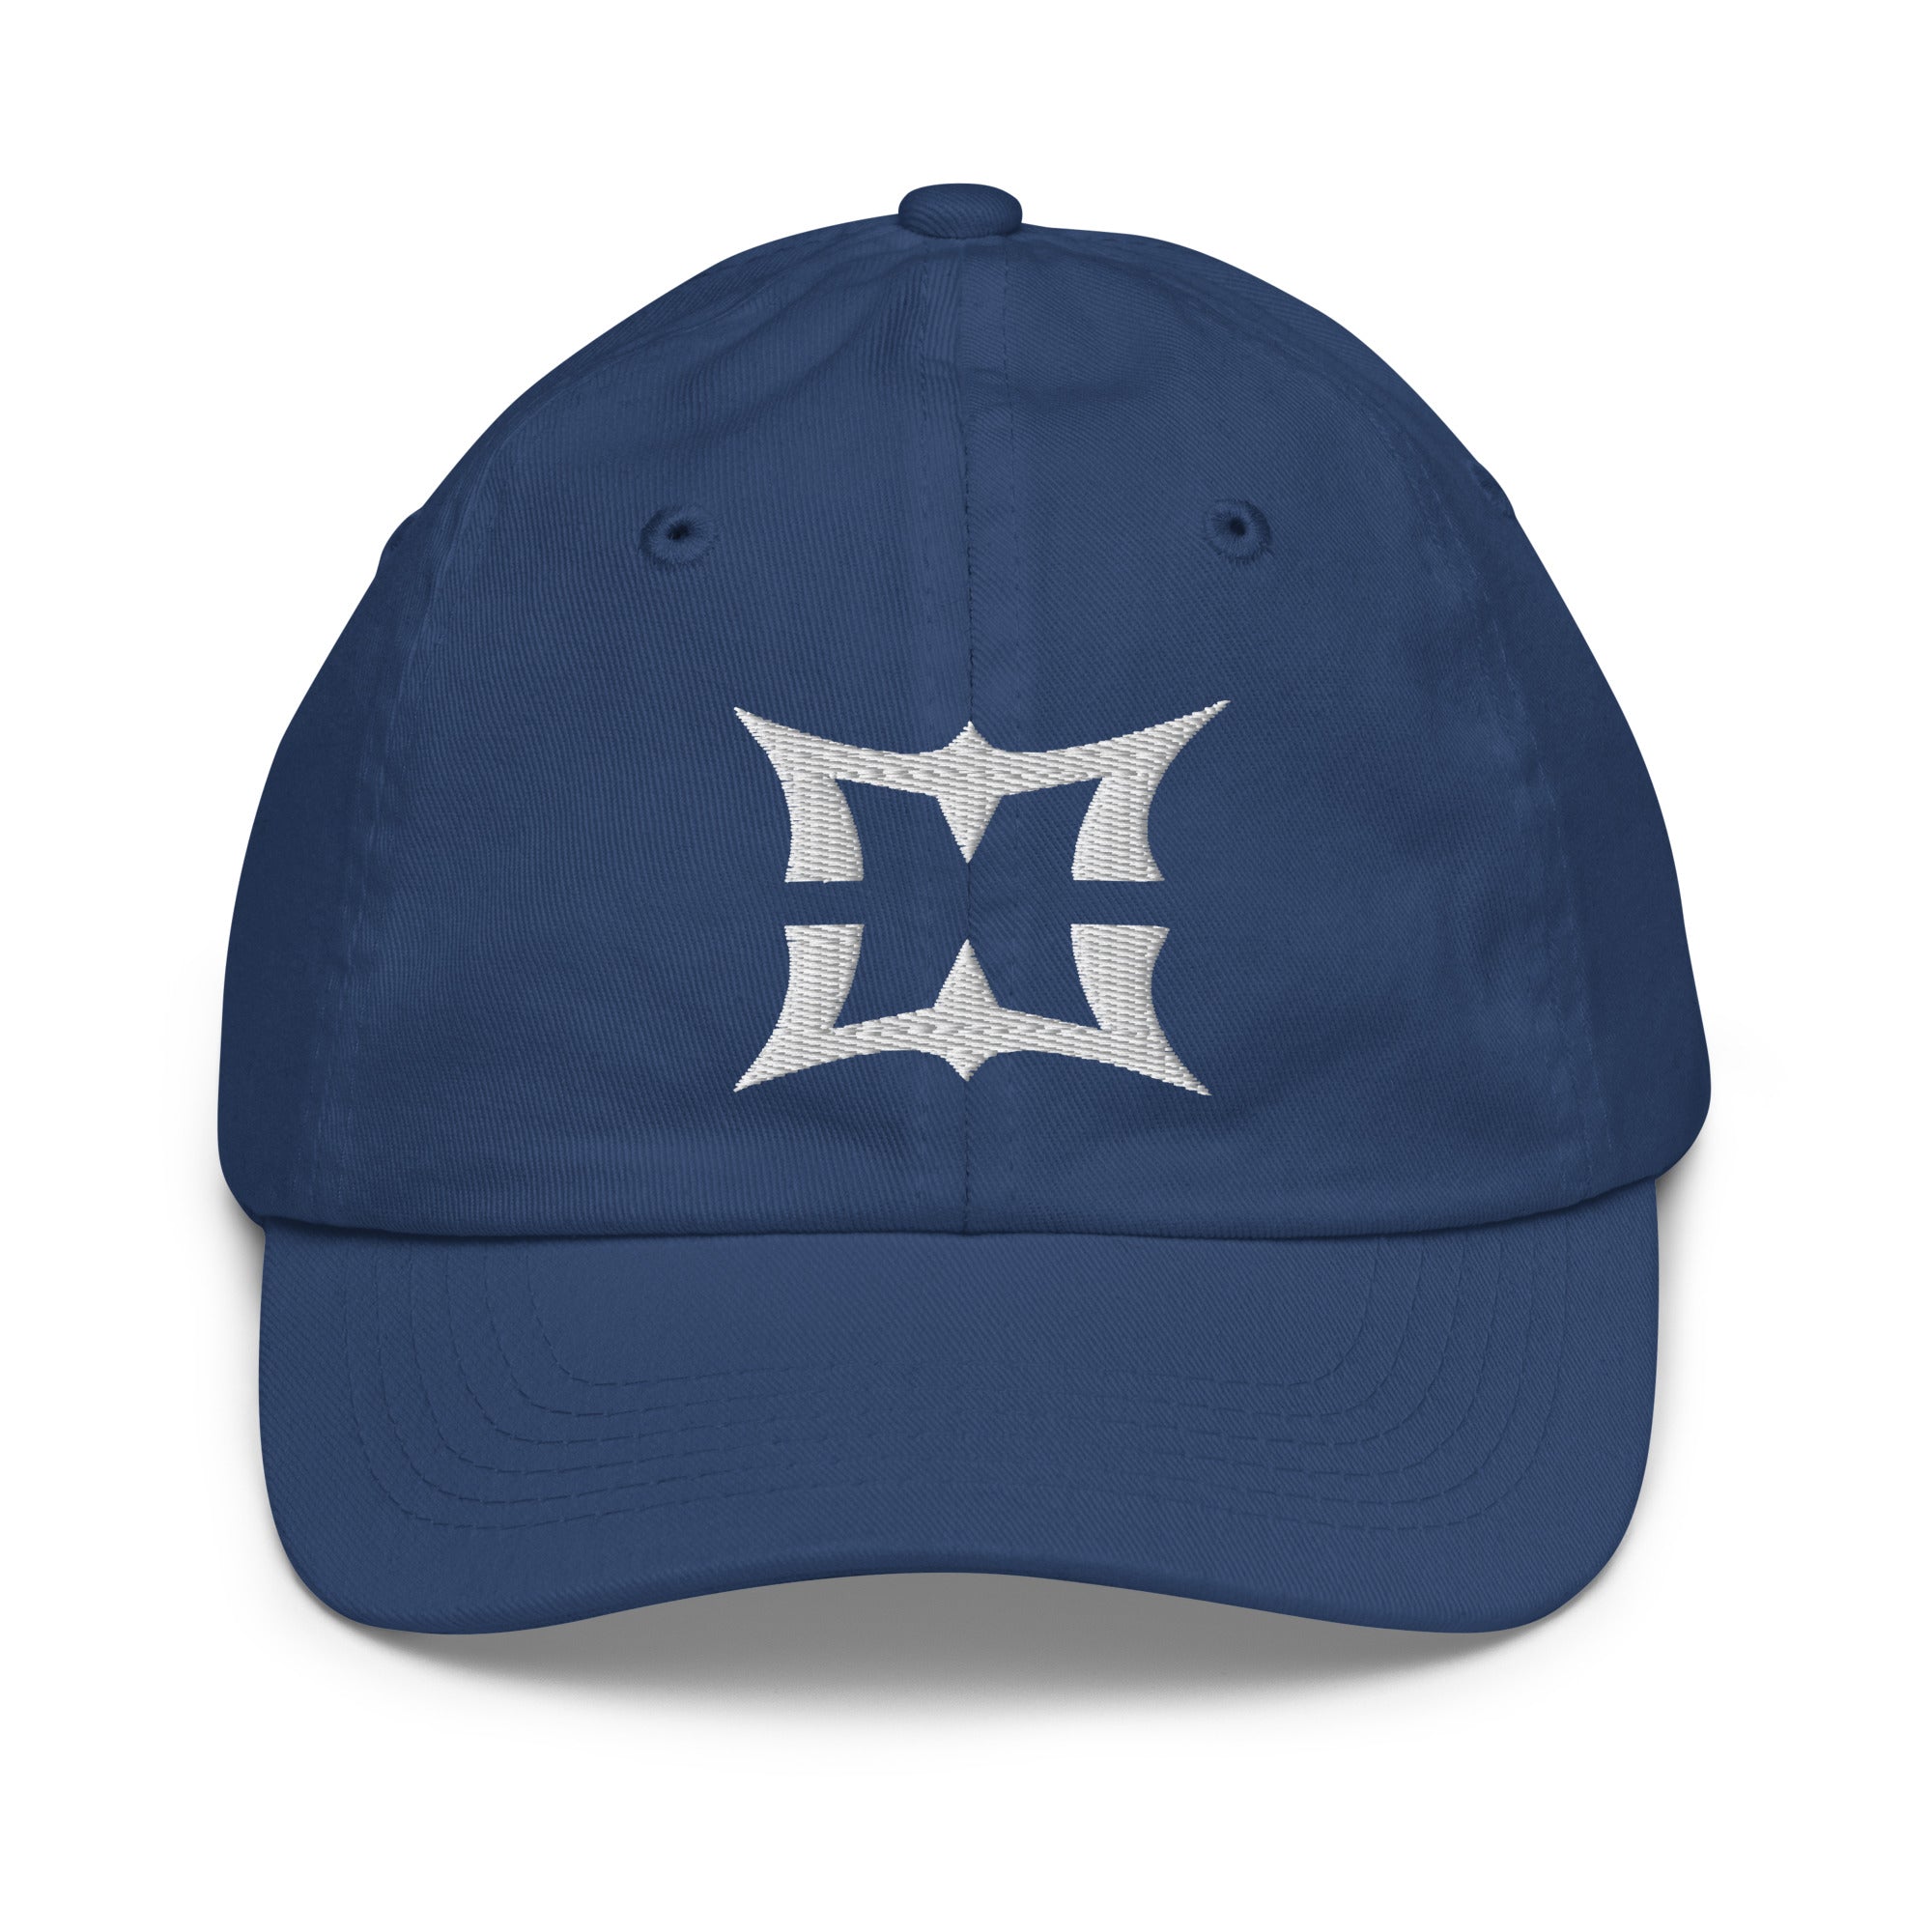 MW baseball cap (youth)